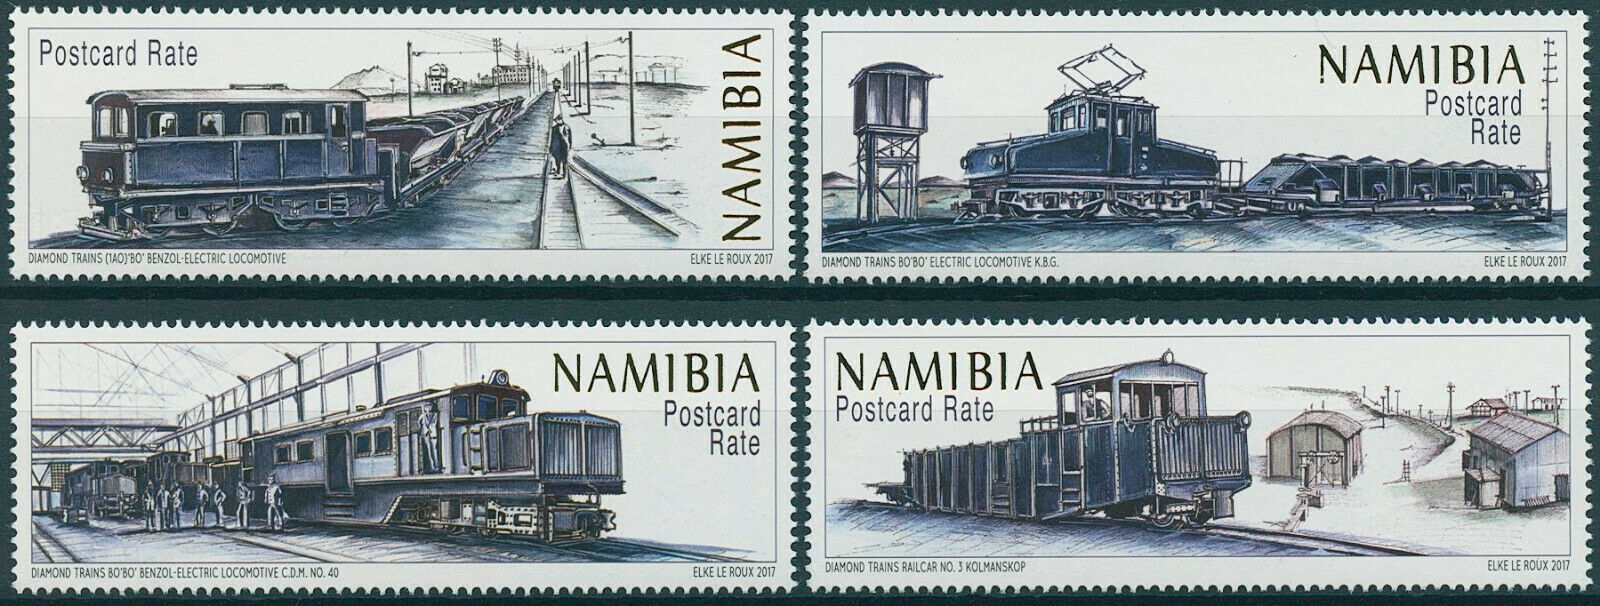 Namibia 2017 MNH Railways Stamps Diamond Trains Electric Lomotives Rail 4v Set